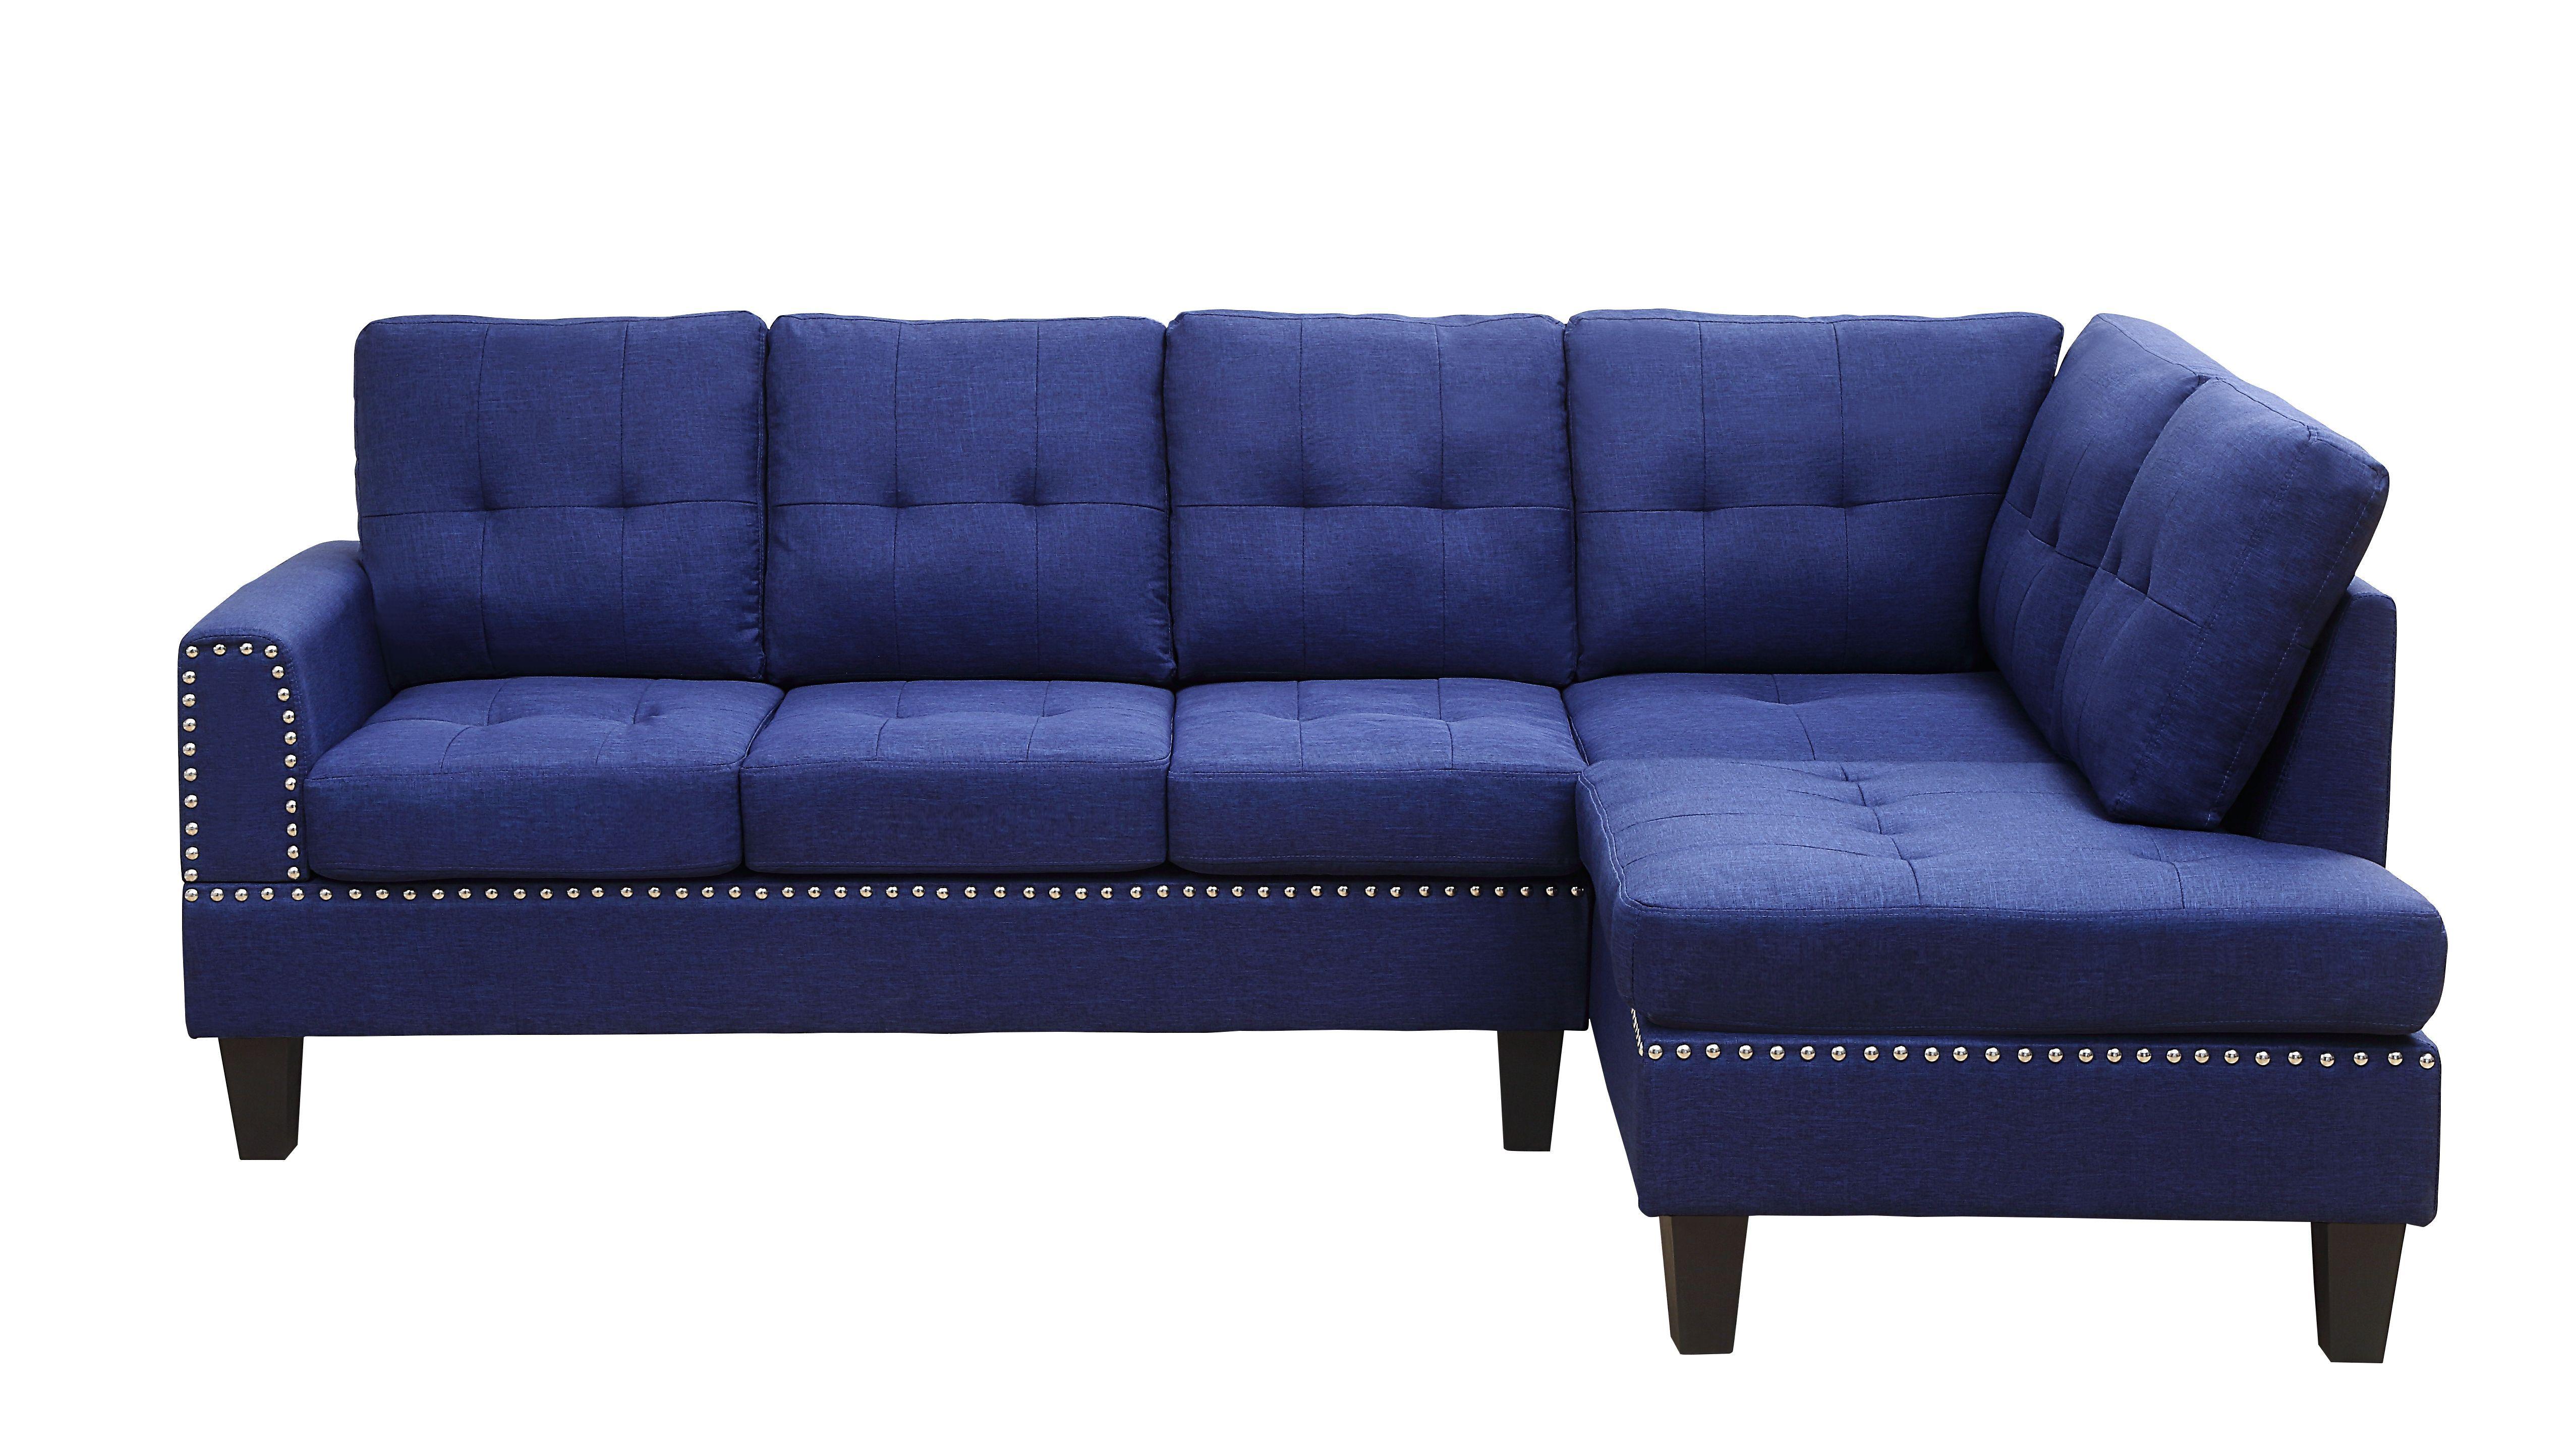 

    
Acme Furniture Jeimmur Sectional Sofa Blue 56480-3pcs
